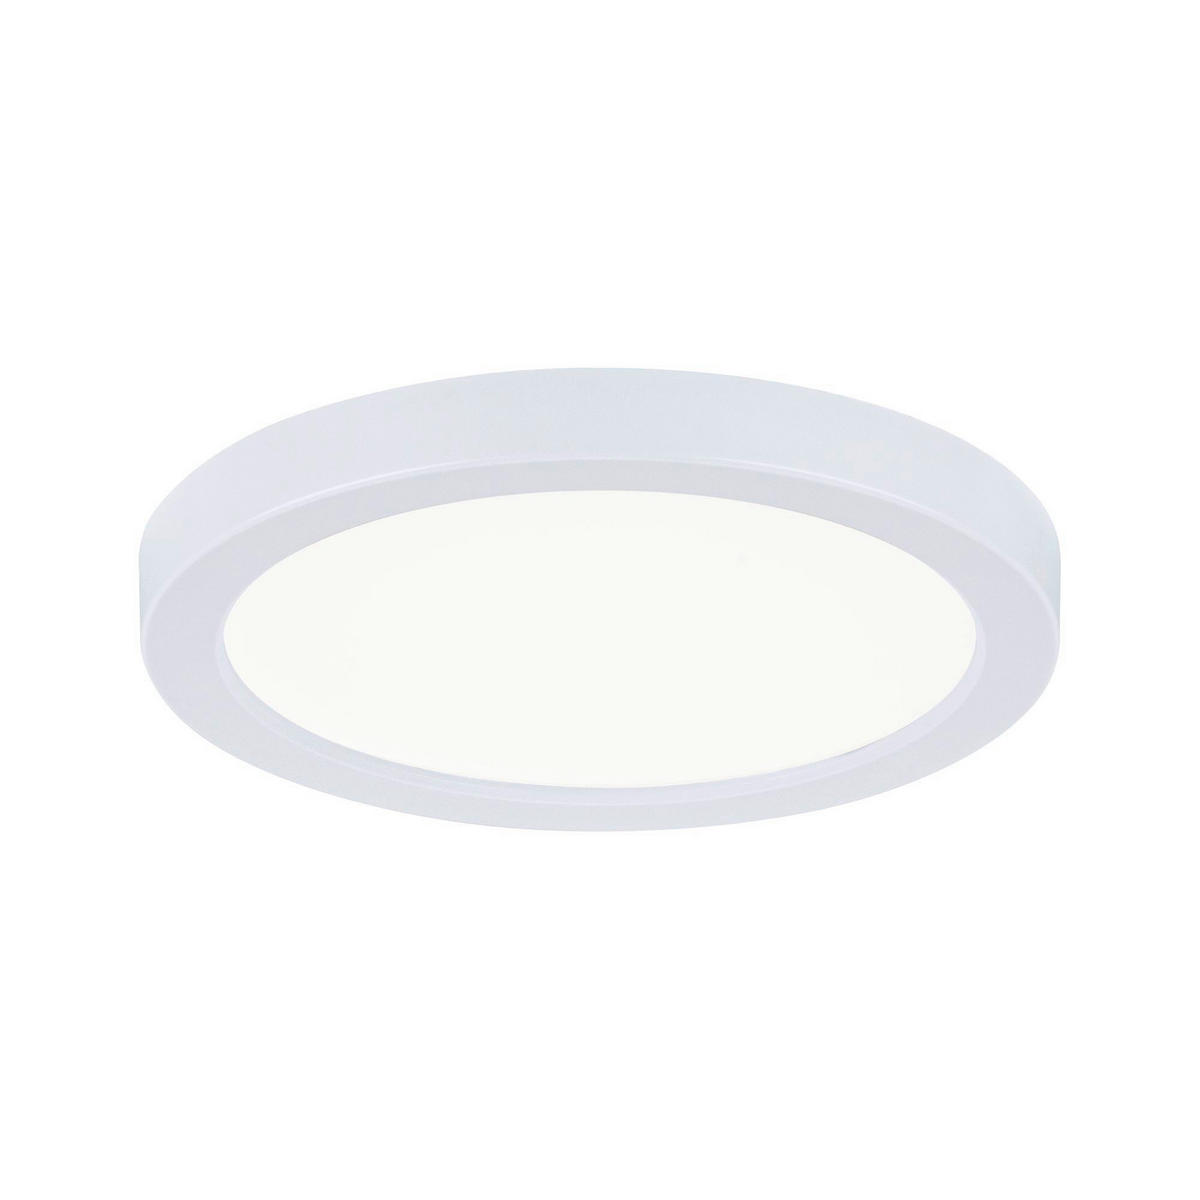 LED-PANEEL  - Weiß, Design, Kunststoff (11,8cm) - Paulmann